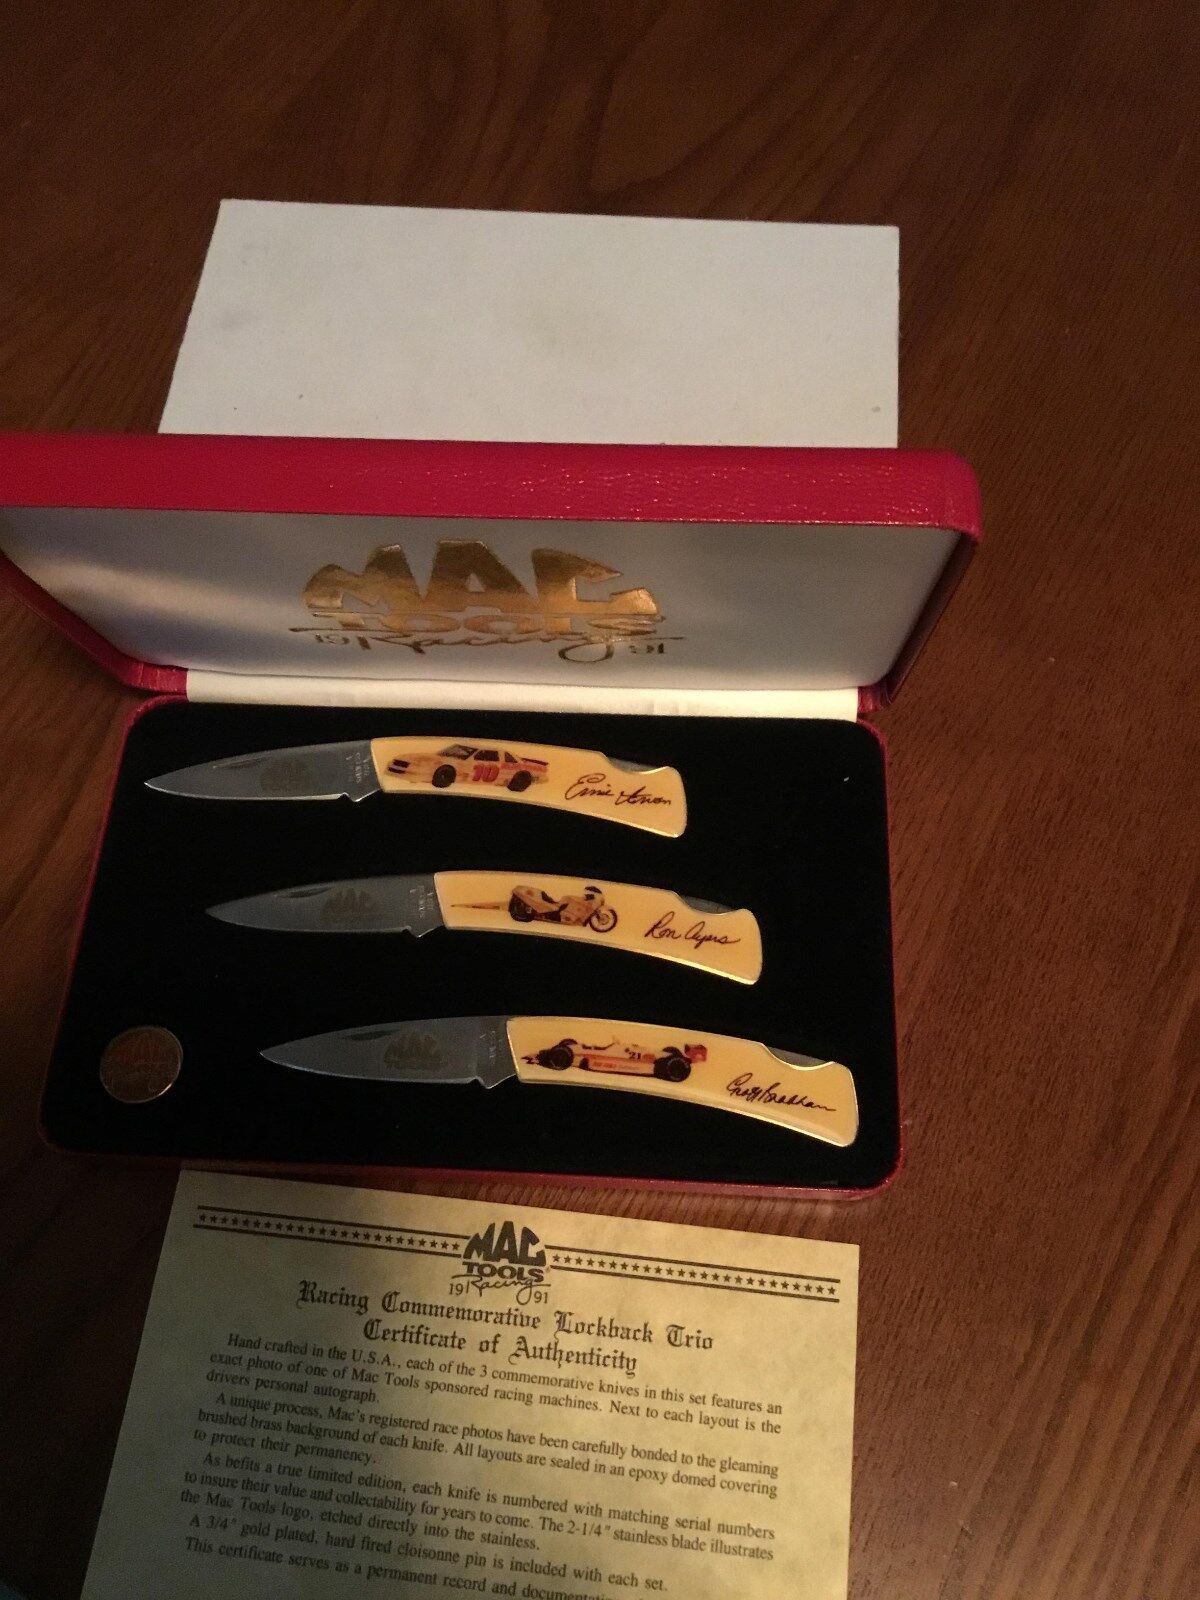  MAC TOOLS 1991 racing commemorative lock back knife trio set